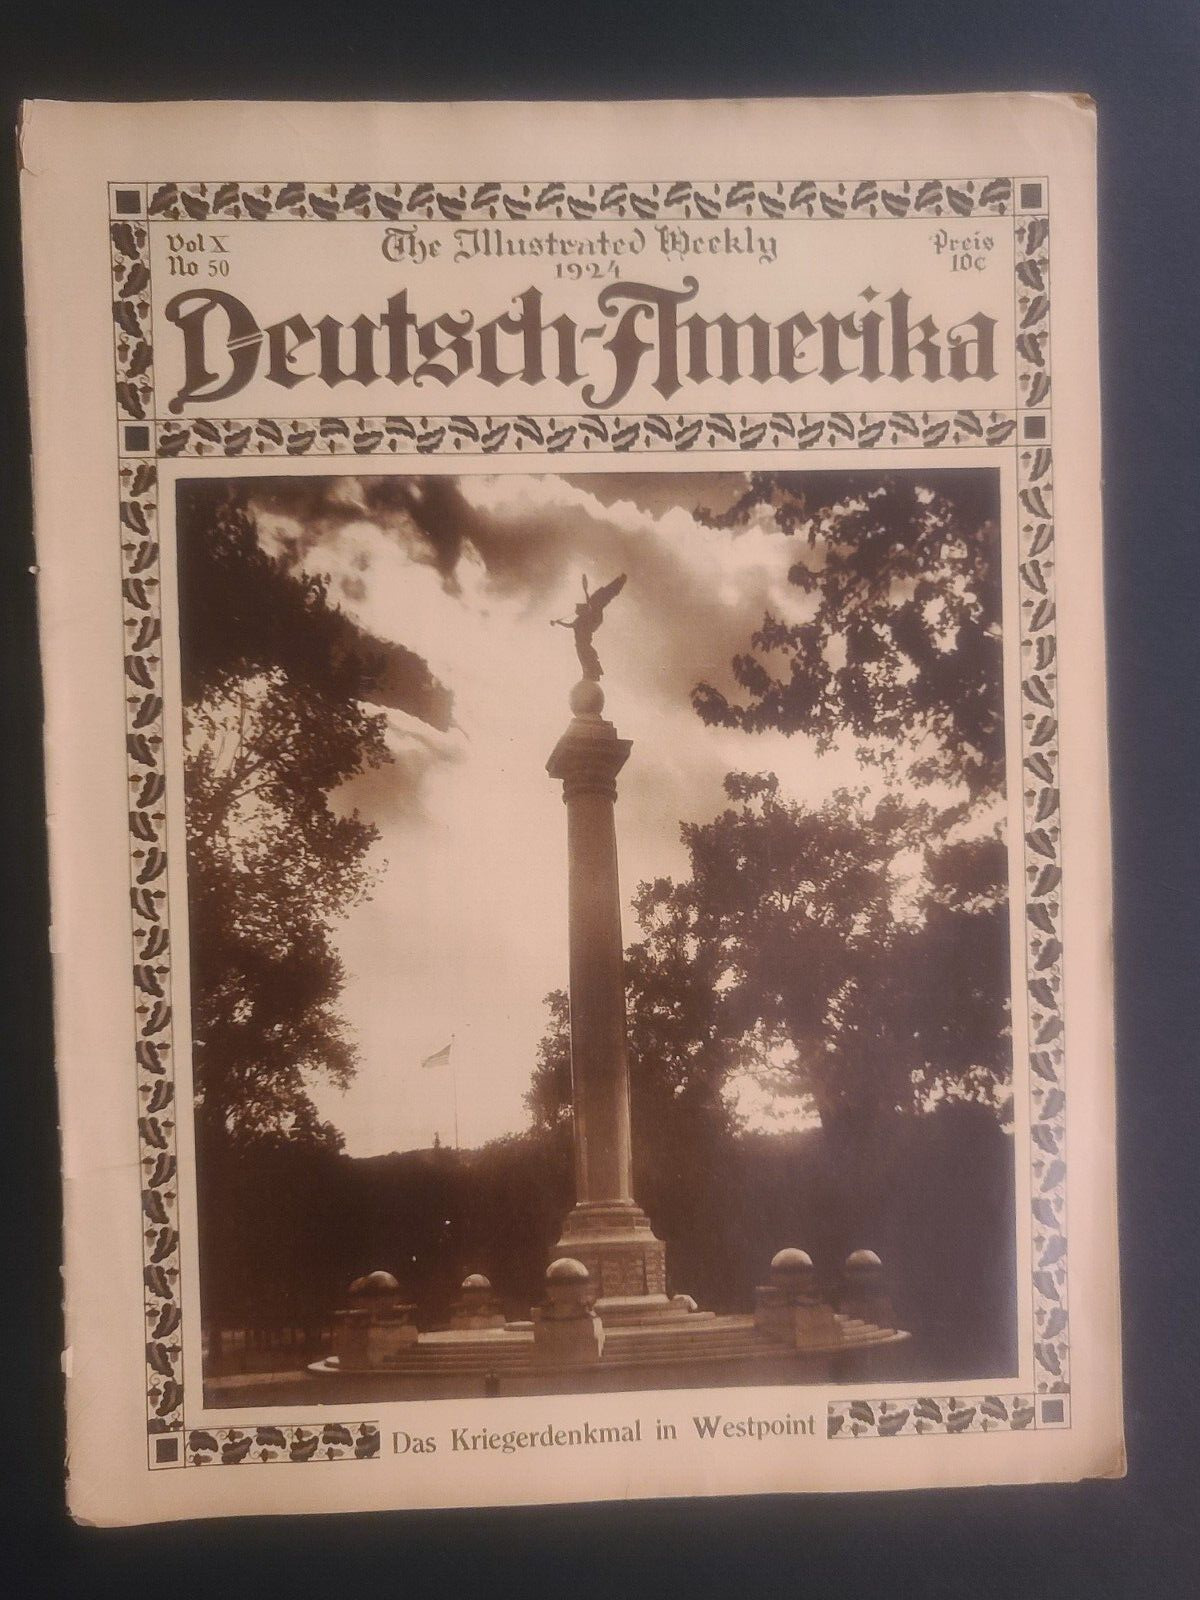 1924 Deutsch-Amerika Volume X No. 50 Illustrated Weekly Journal 31 Pages